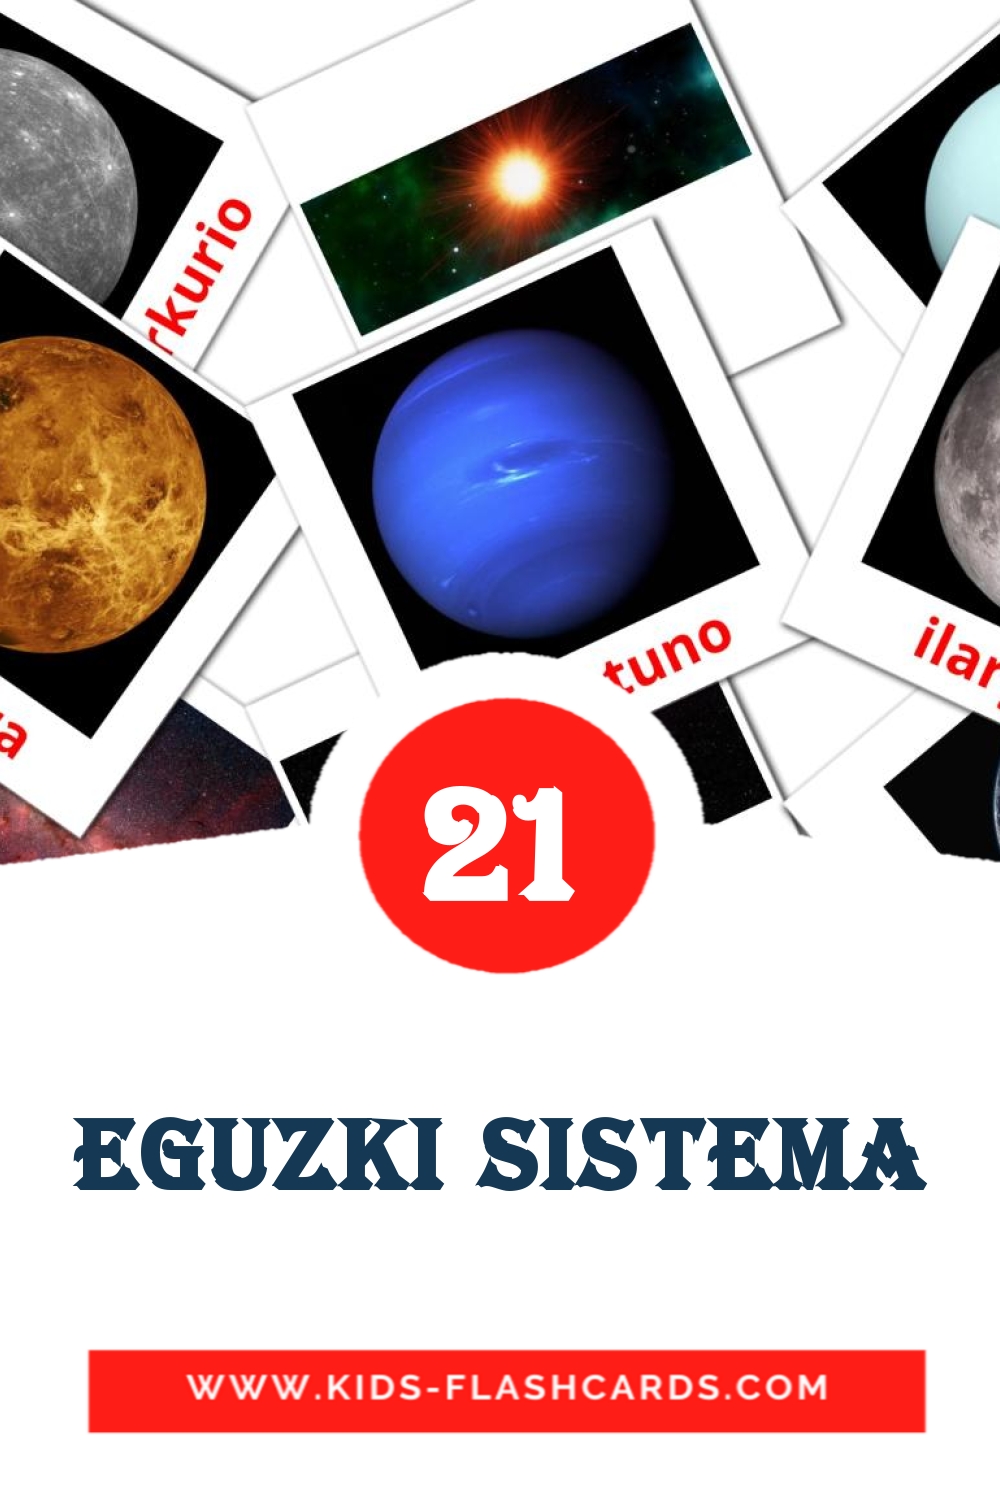 21 eguzki sistema Picture Cards for Kindergarden in basque